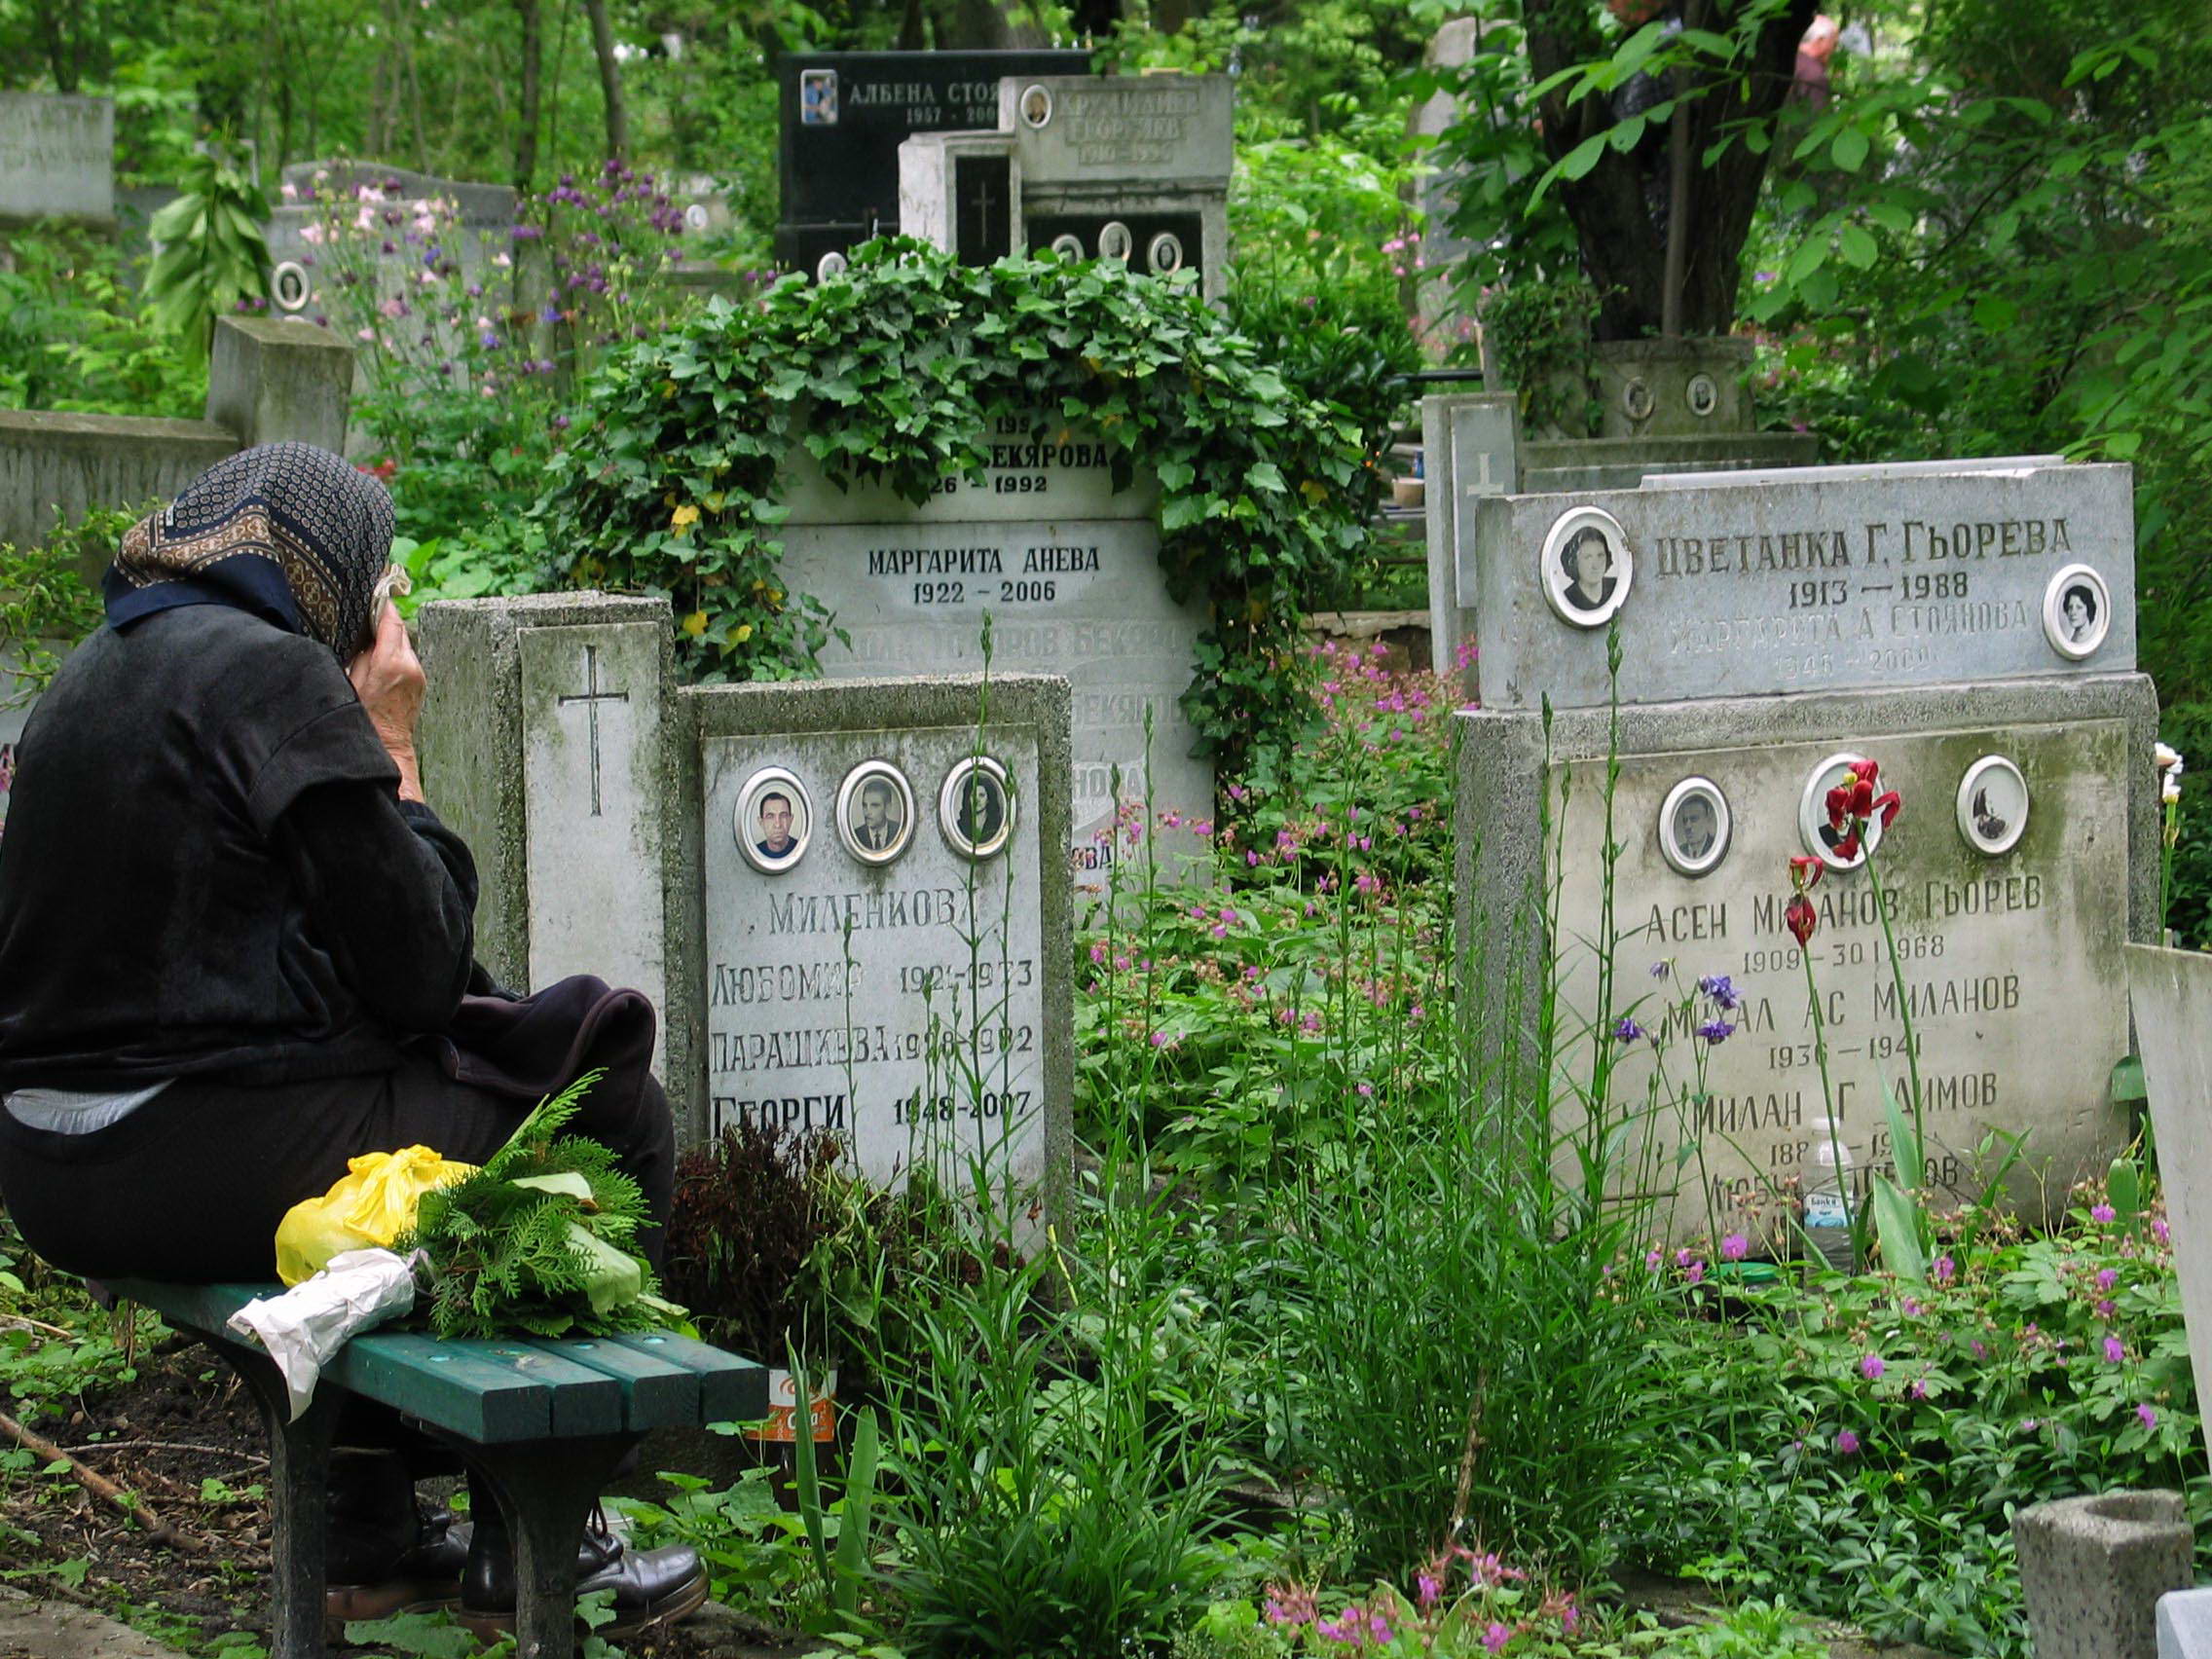 Пак поругаха гроба на мистериозно убита софийска красавица 